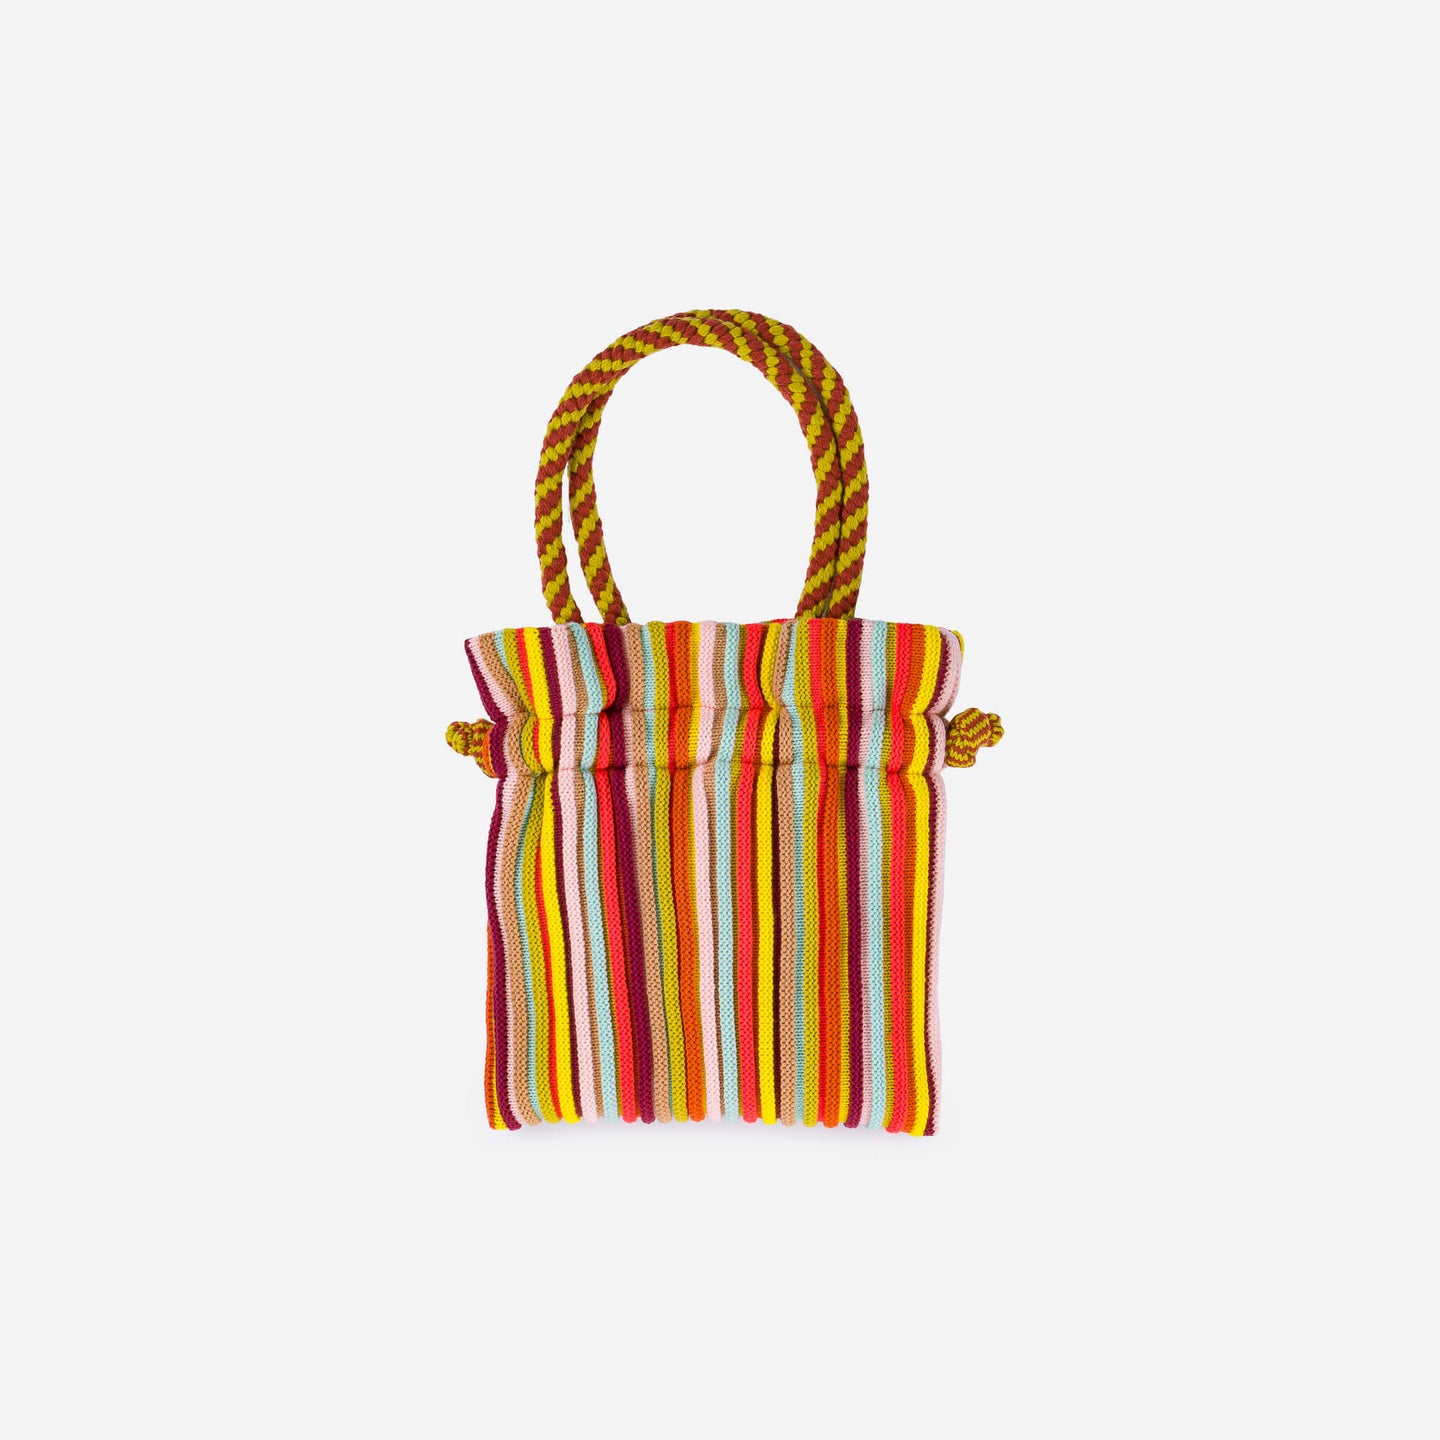 Circus Mini Tote Drawstring Knit Bag Macrame Handles Stripe